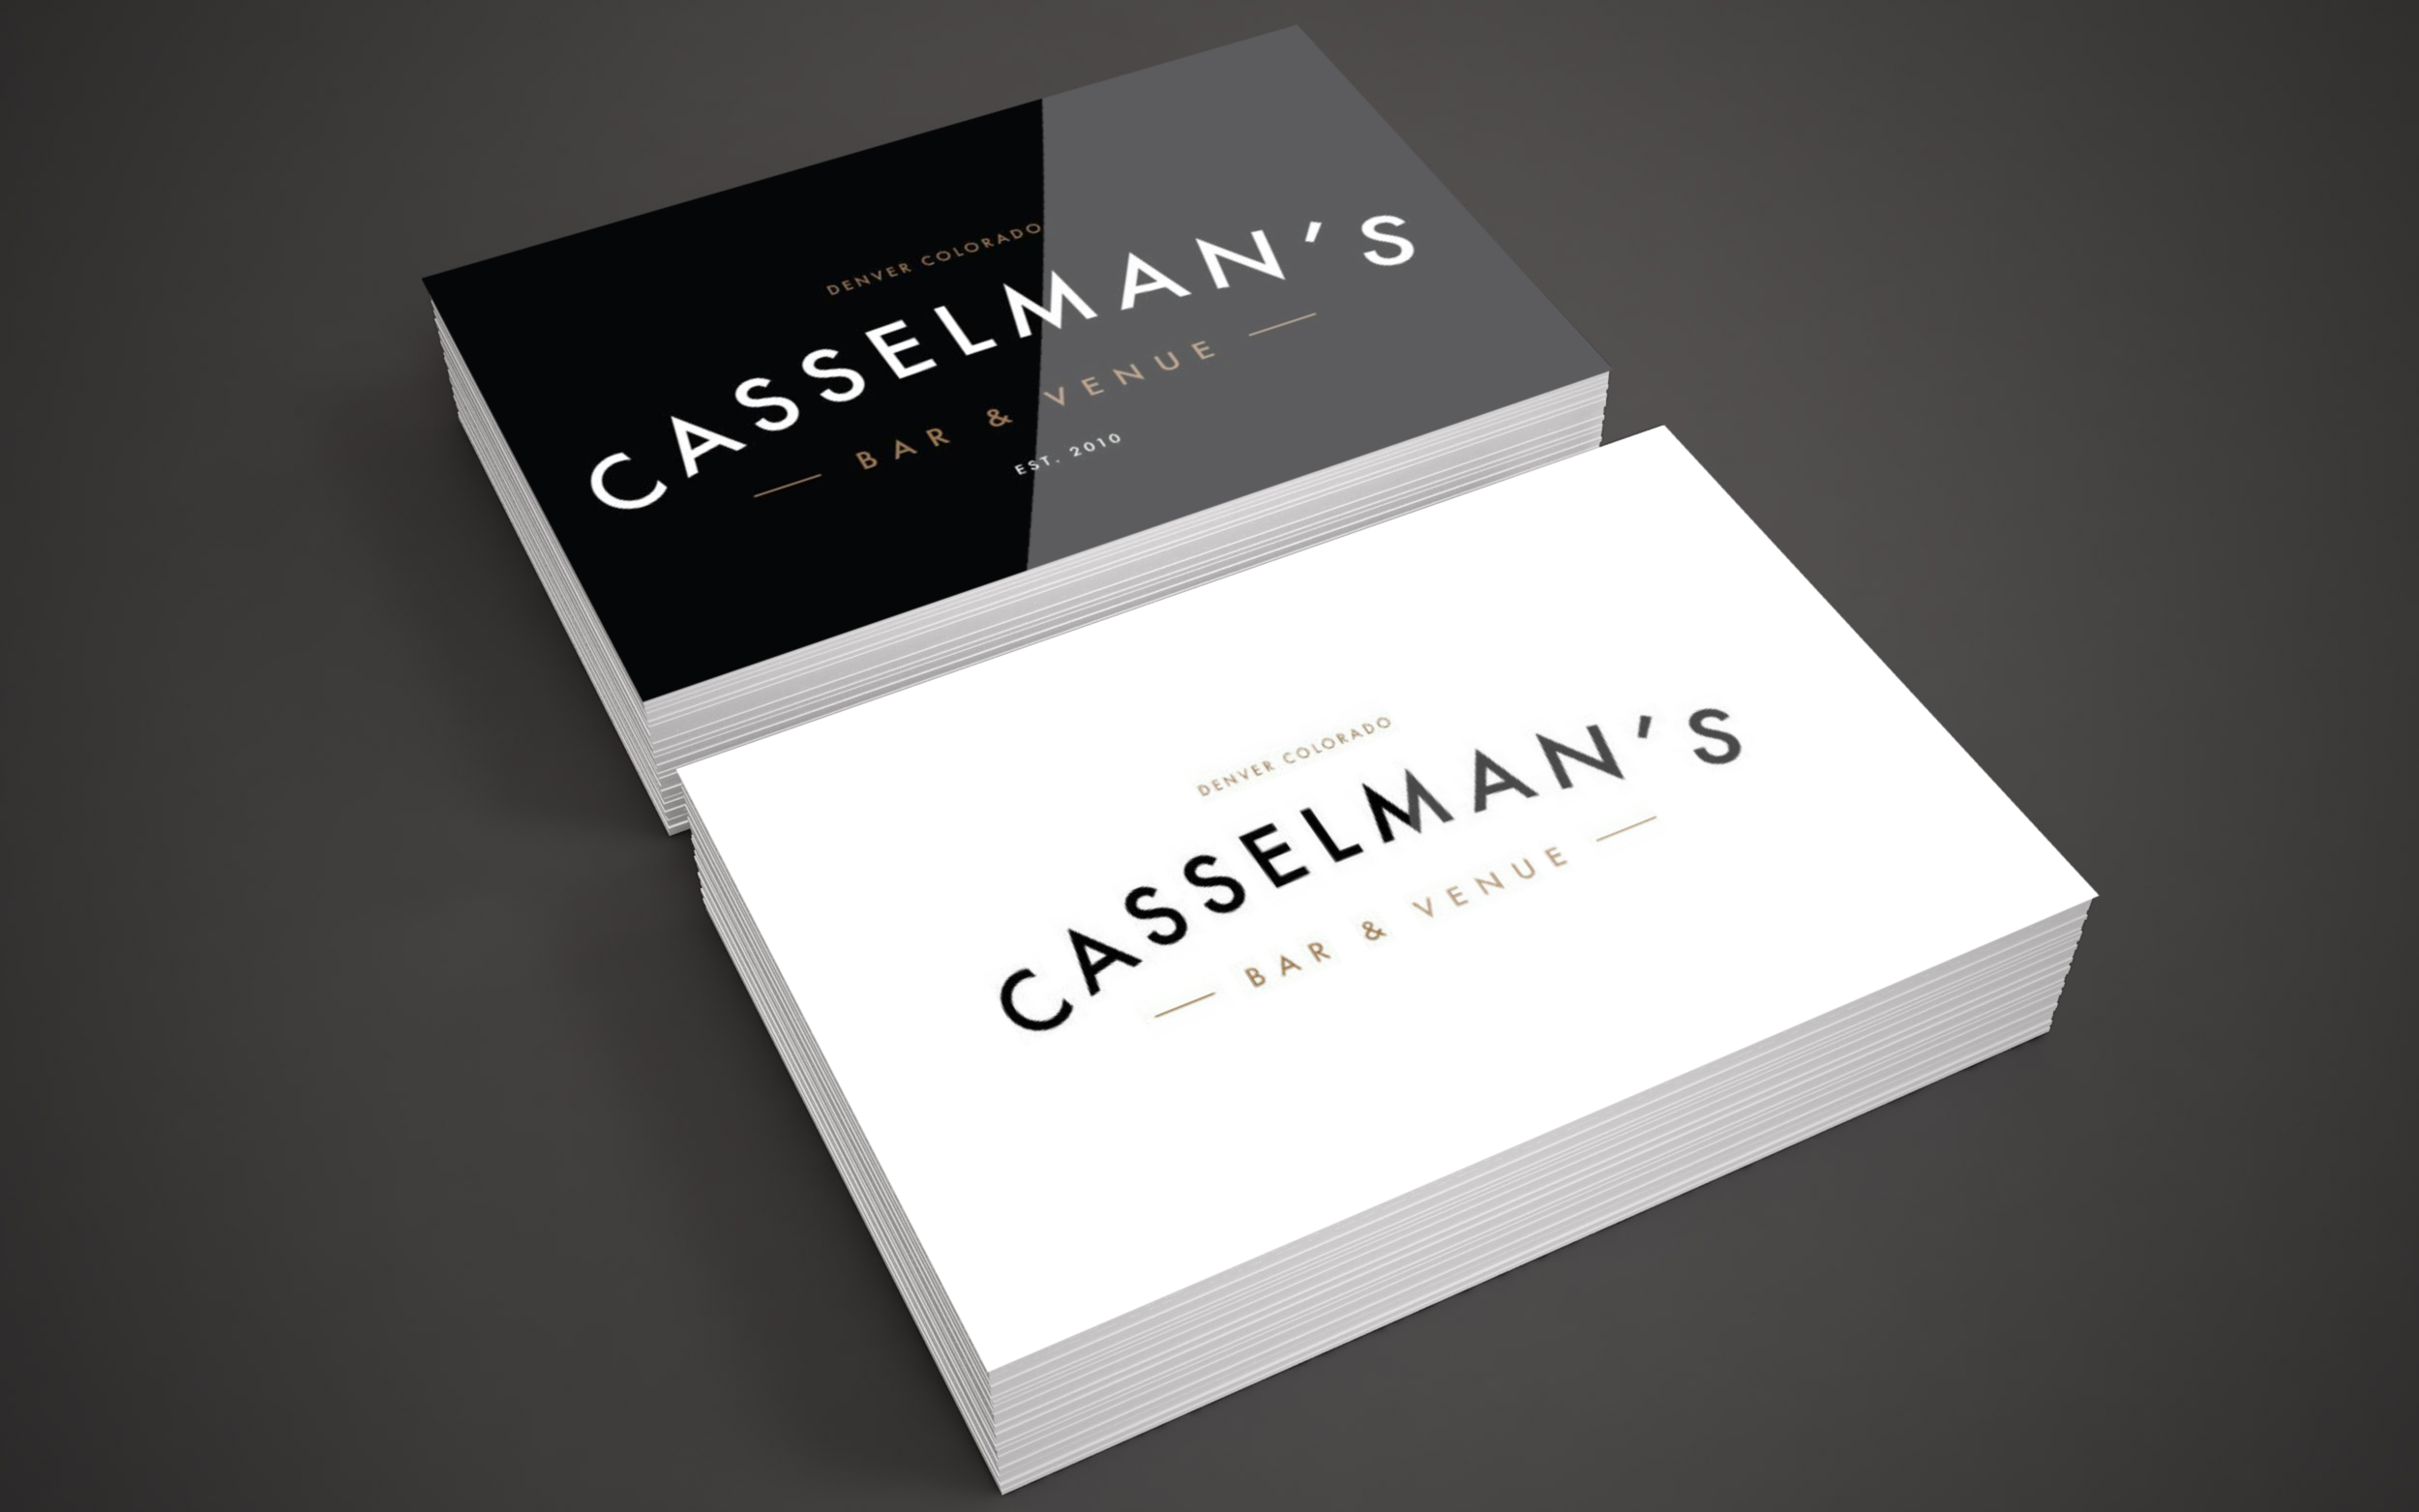 Casselman's